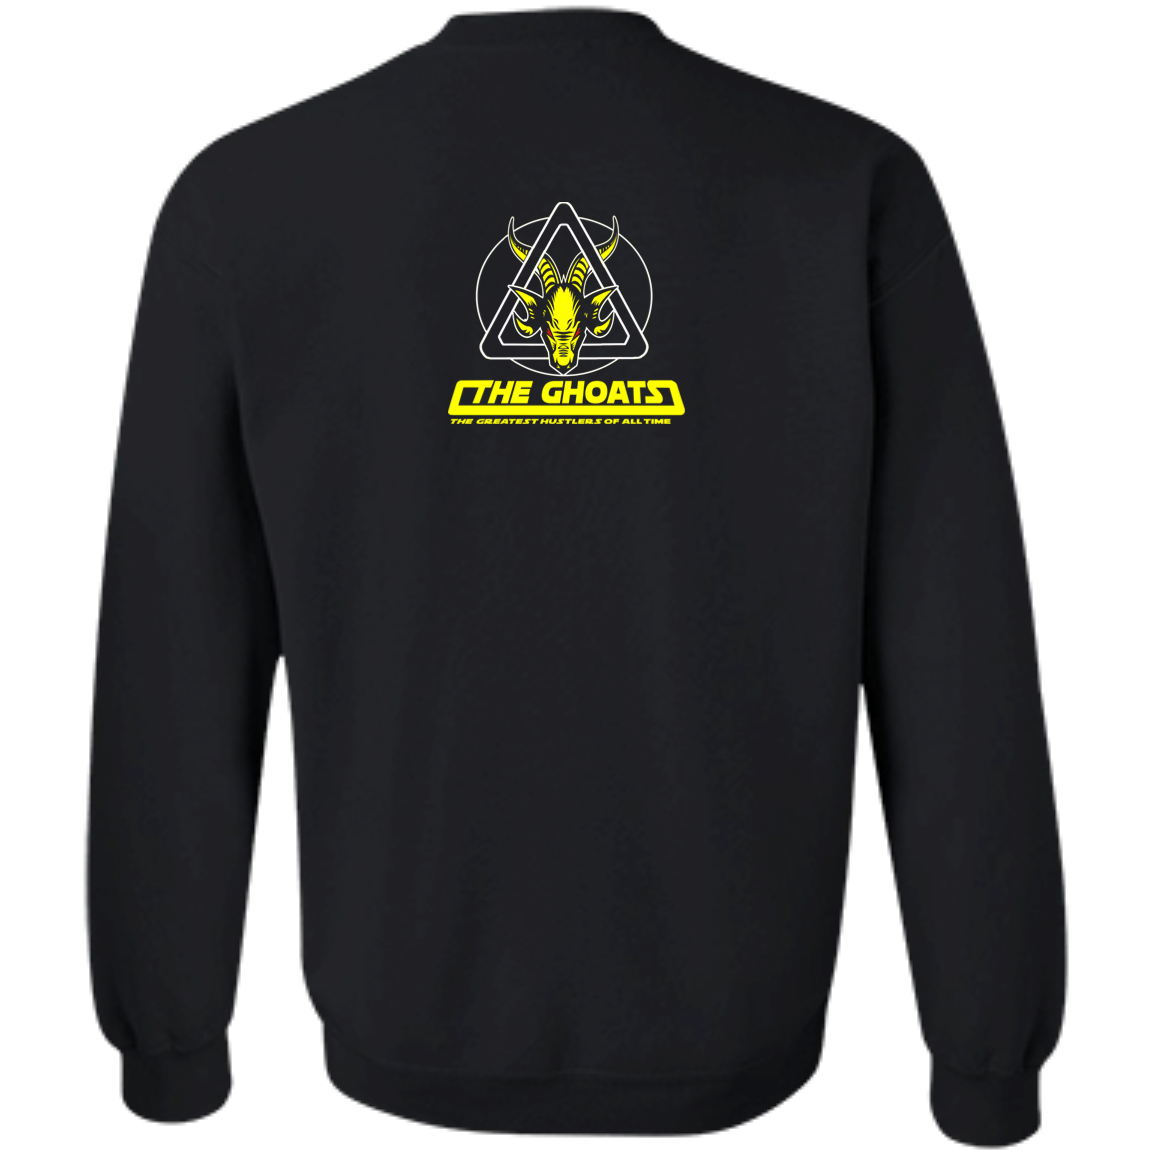 The GHOATS Custom Design. # 39 The Dark Side of Hustling. Crewneck Pullover Sweatshirt